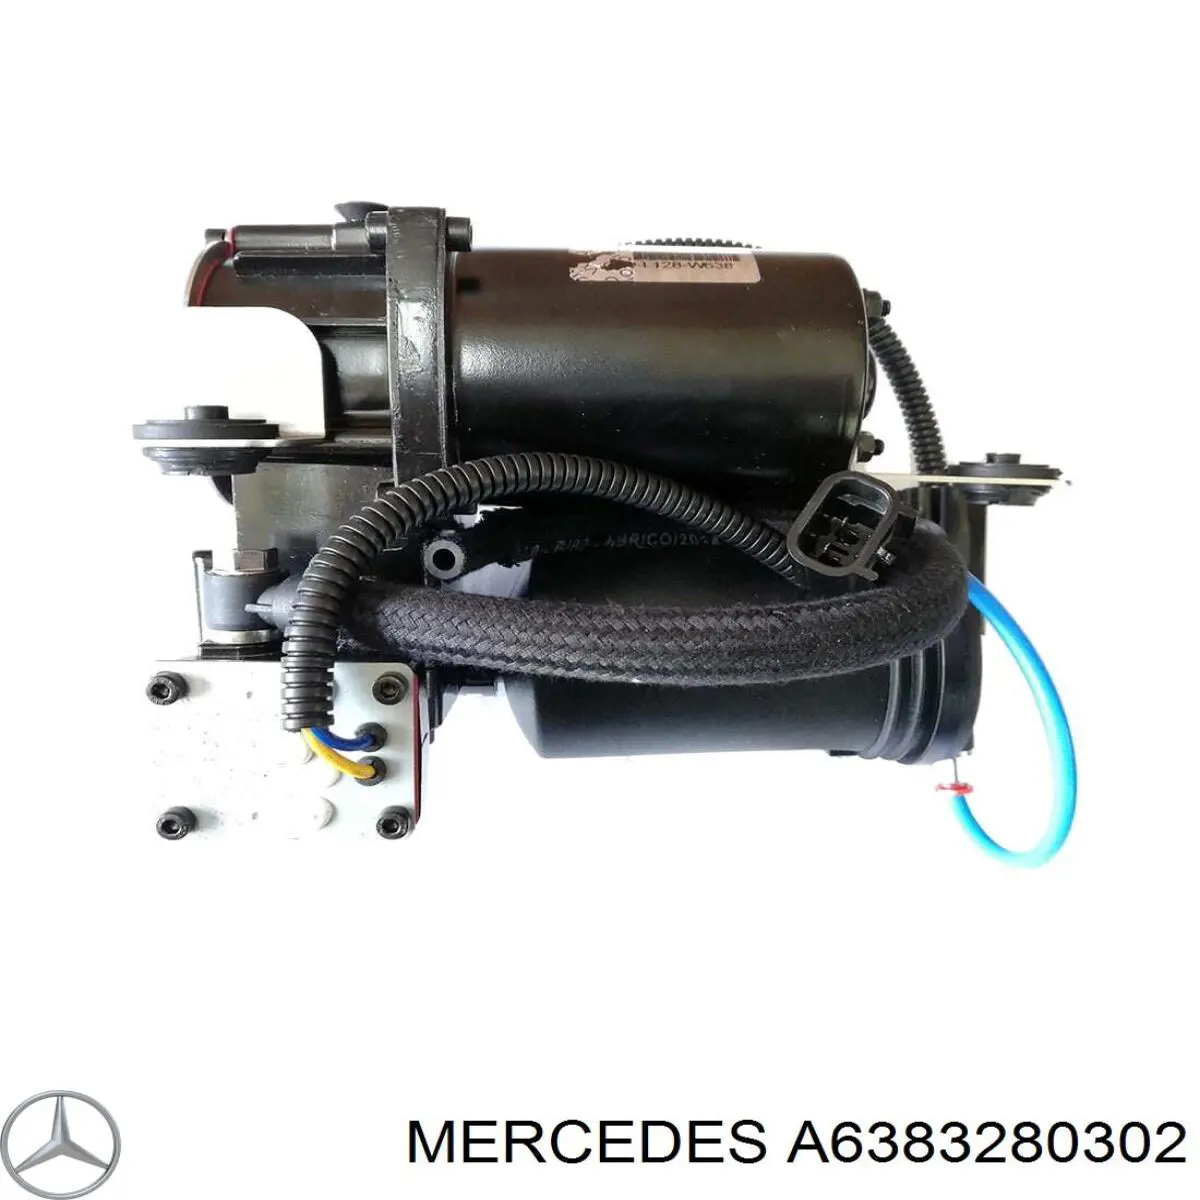 A6383280302 Mercedes компрессор пневмоподкачки (амортизаторов)